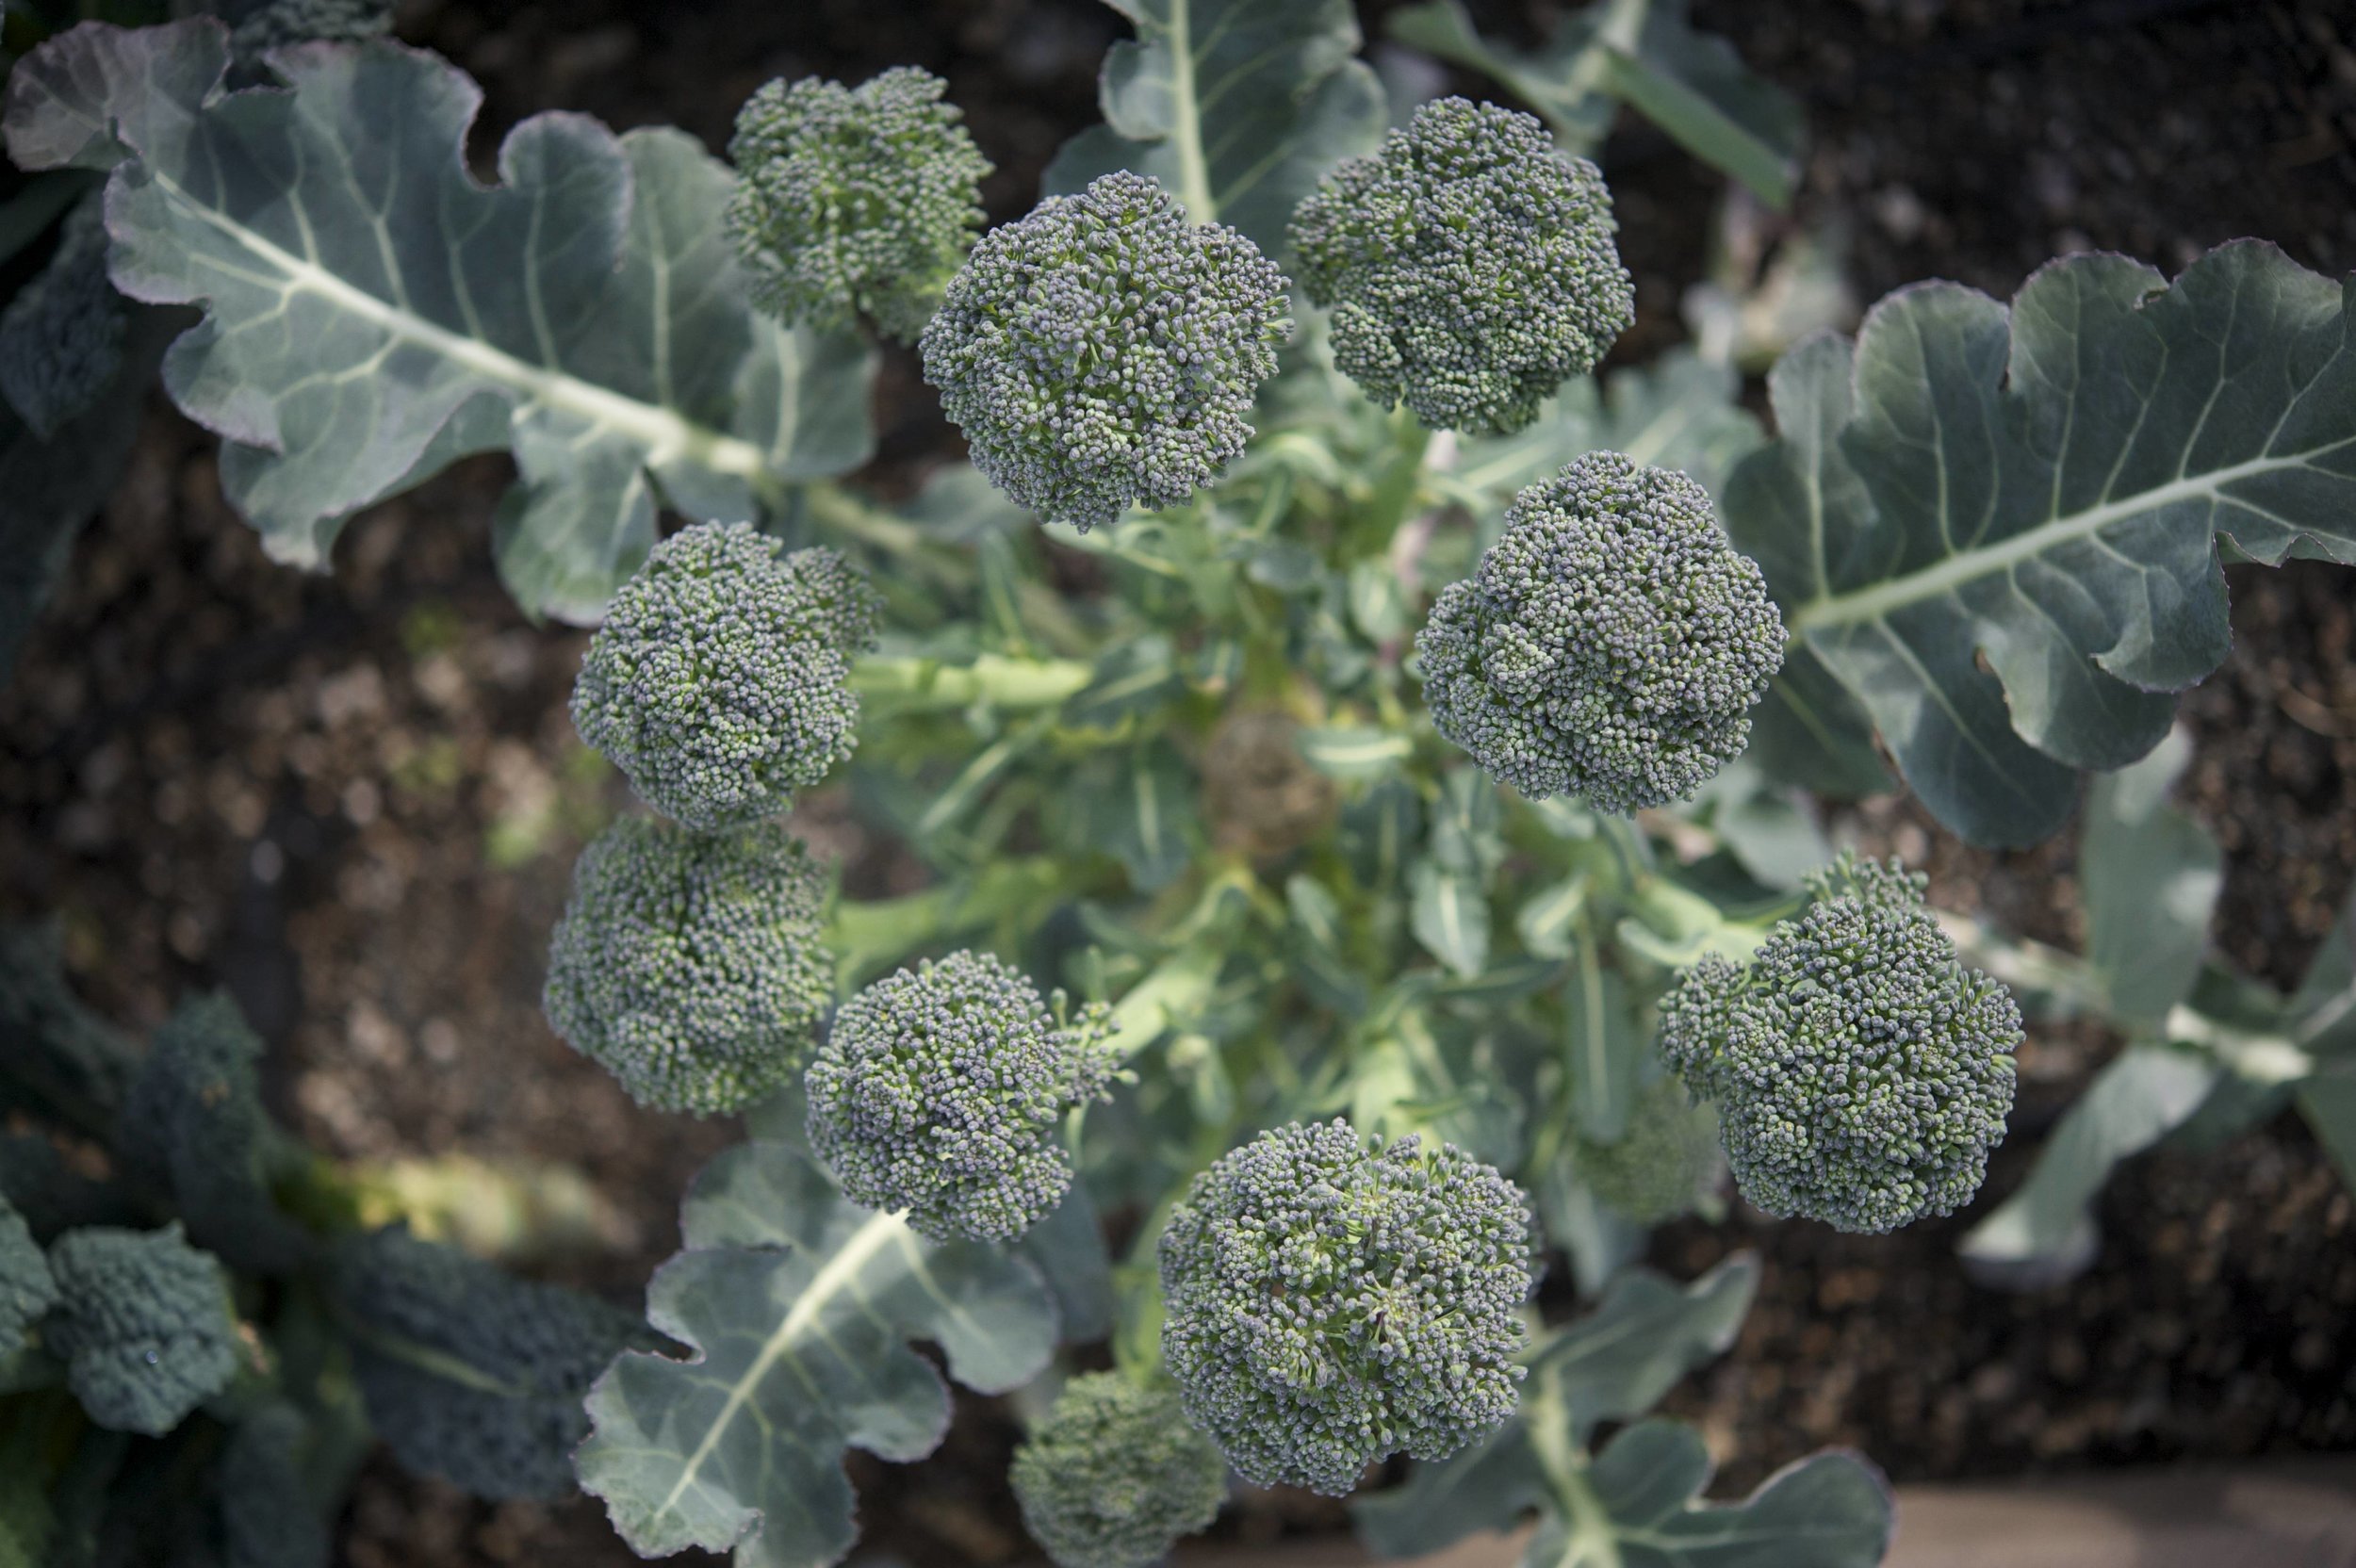 Broccoli side shoots/florets